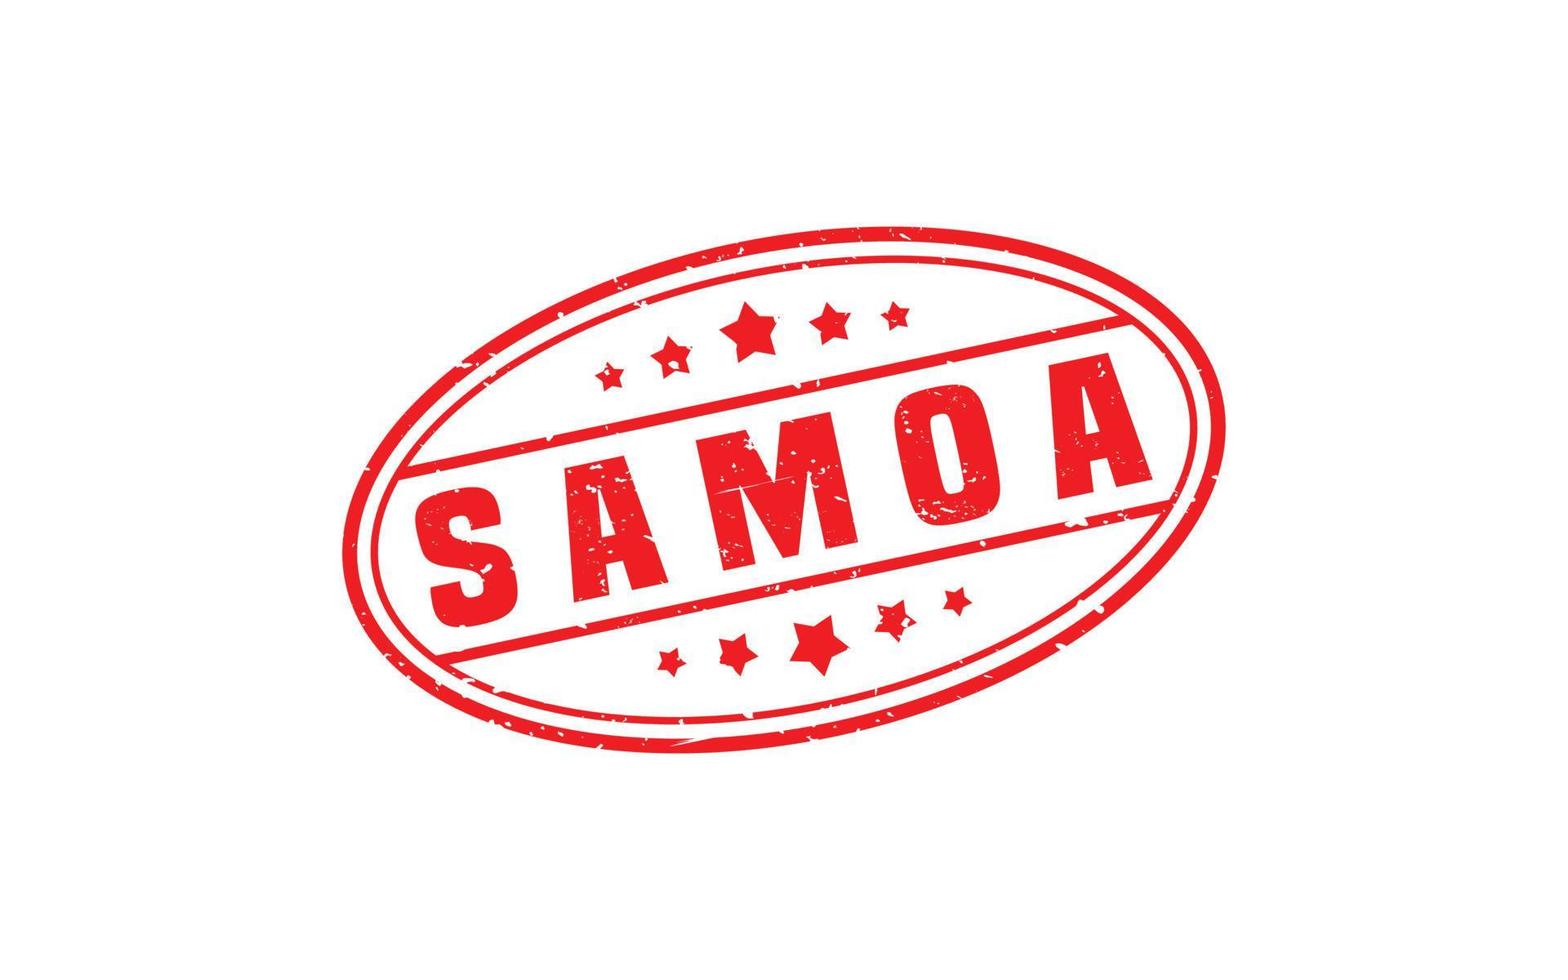 samoa carimbo borracha com grunge estilo em branco fundo vetor